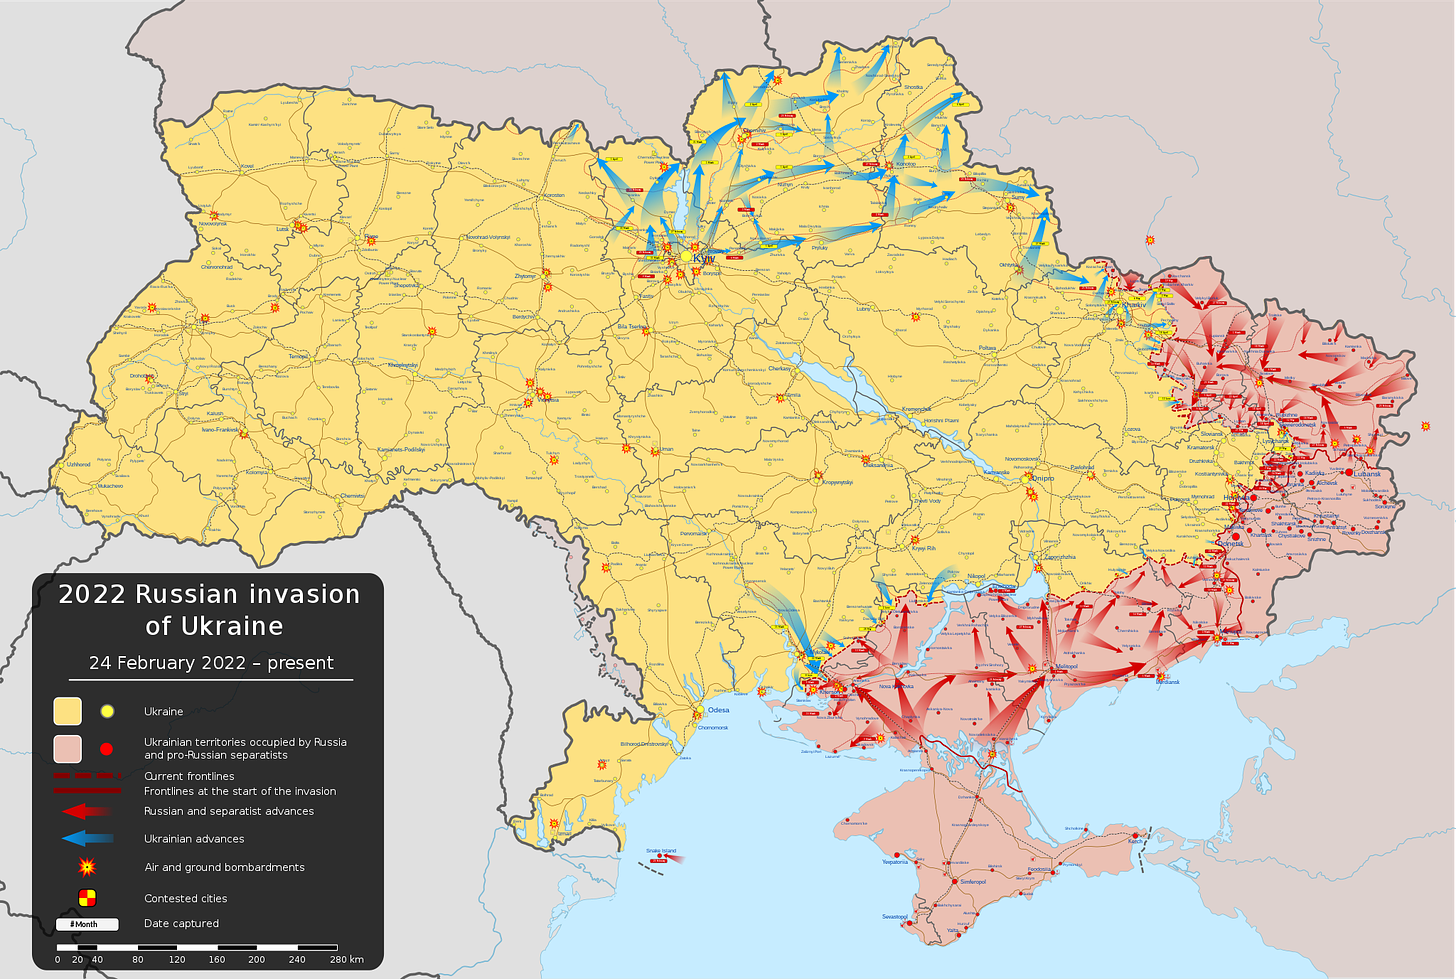 Ground situation in Ukraine as of June 23, 2022 (Image: Viewsridge, CC BY-SA 4.0, via Wikimedia Commons)